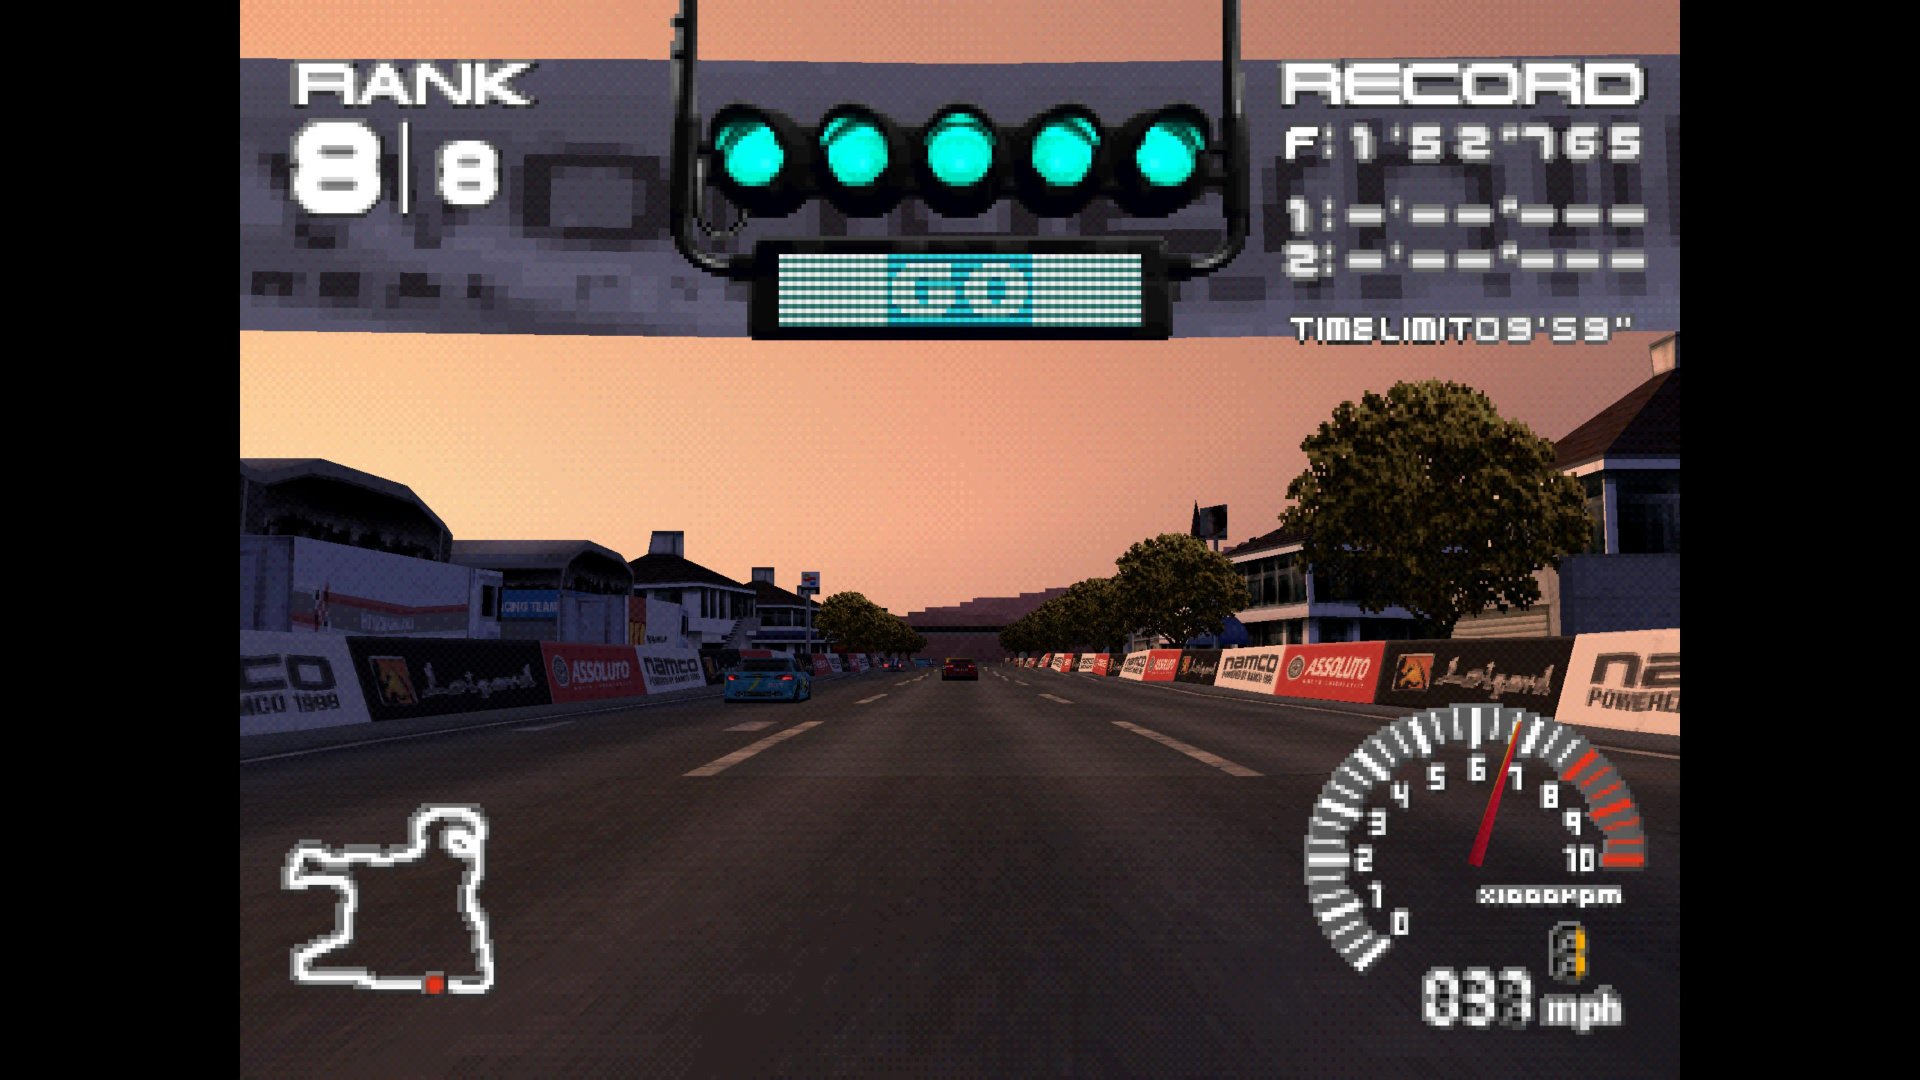 Ridge Racer 7 (Usado) - PS3 - Shock Games